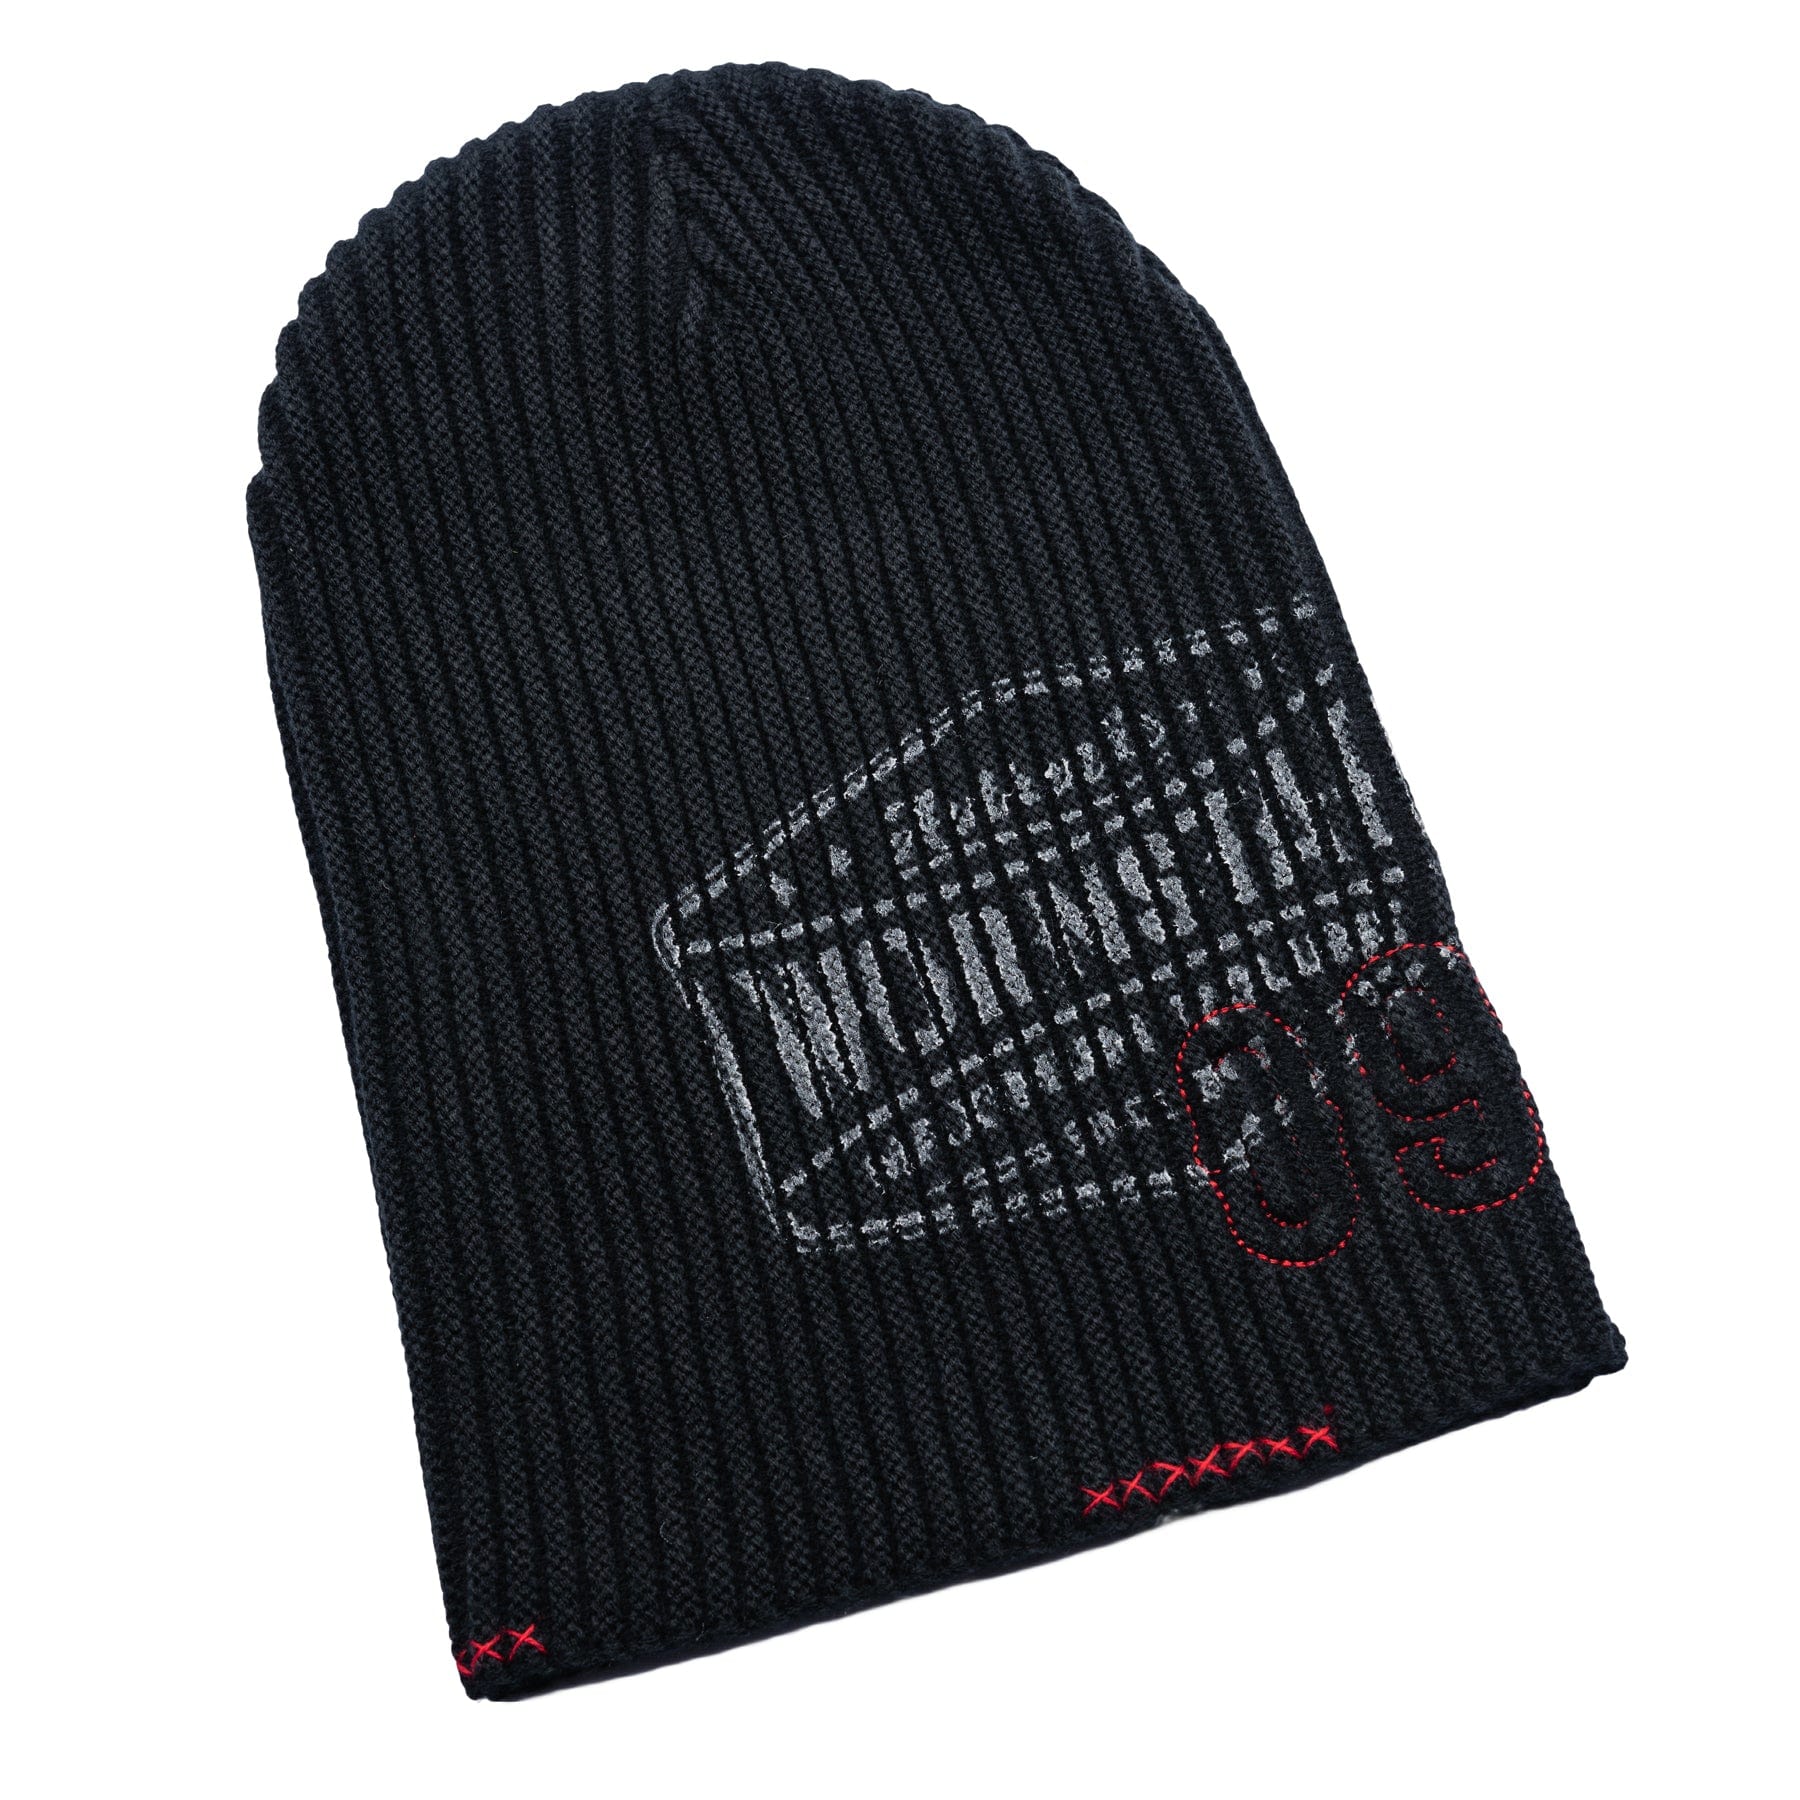 Wornstar Clothing Hat Max Volume Beanie - Classic Black